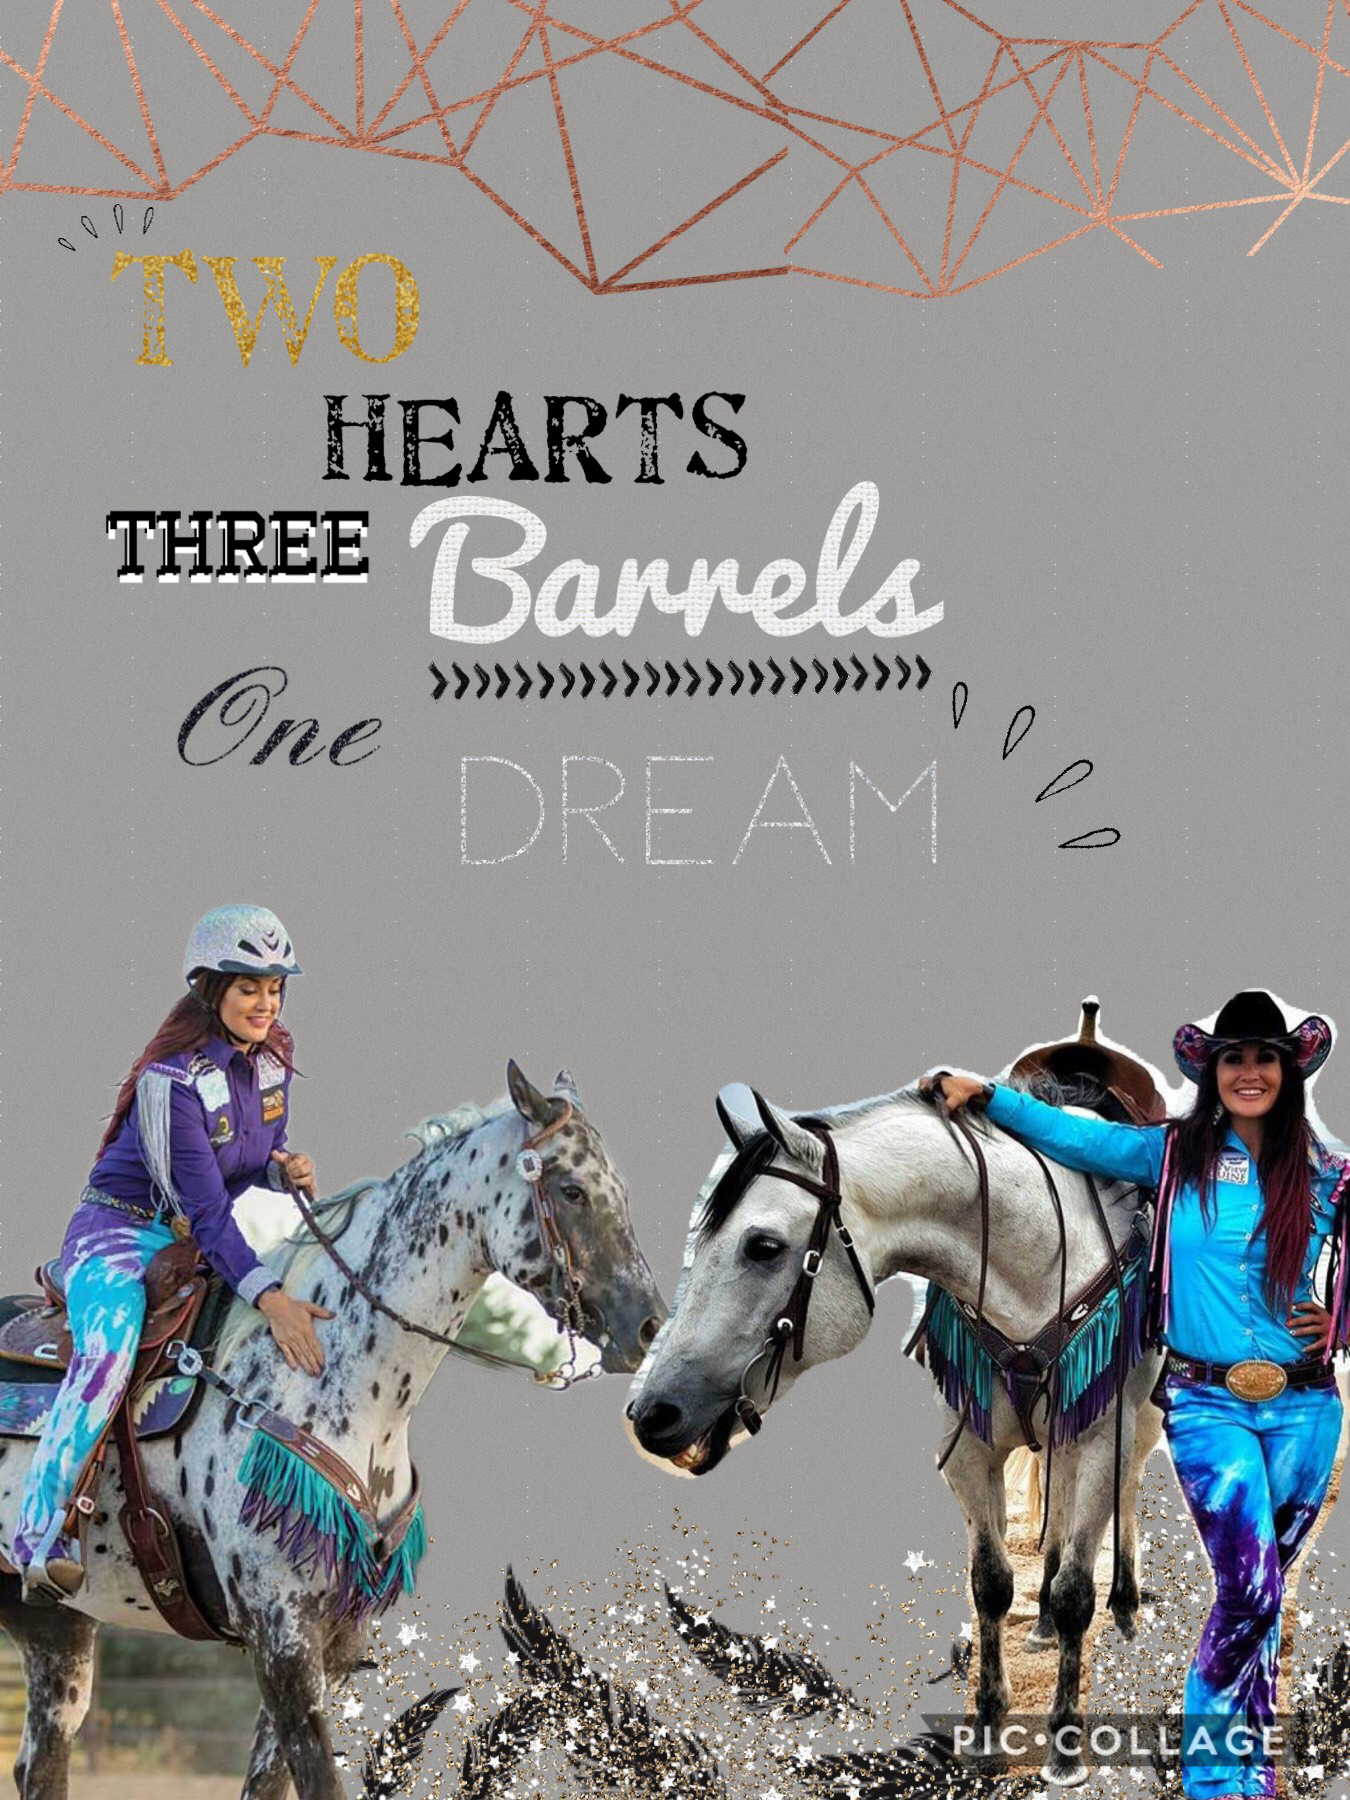 Three barrels…two hearts…One Dream 💕